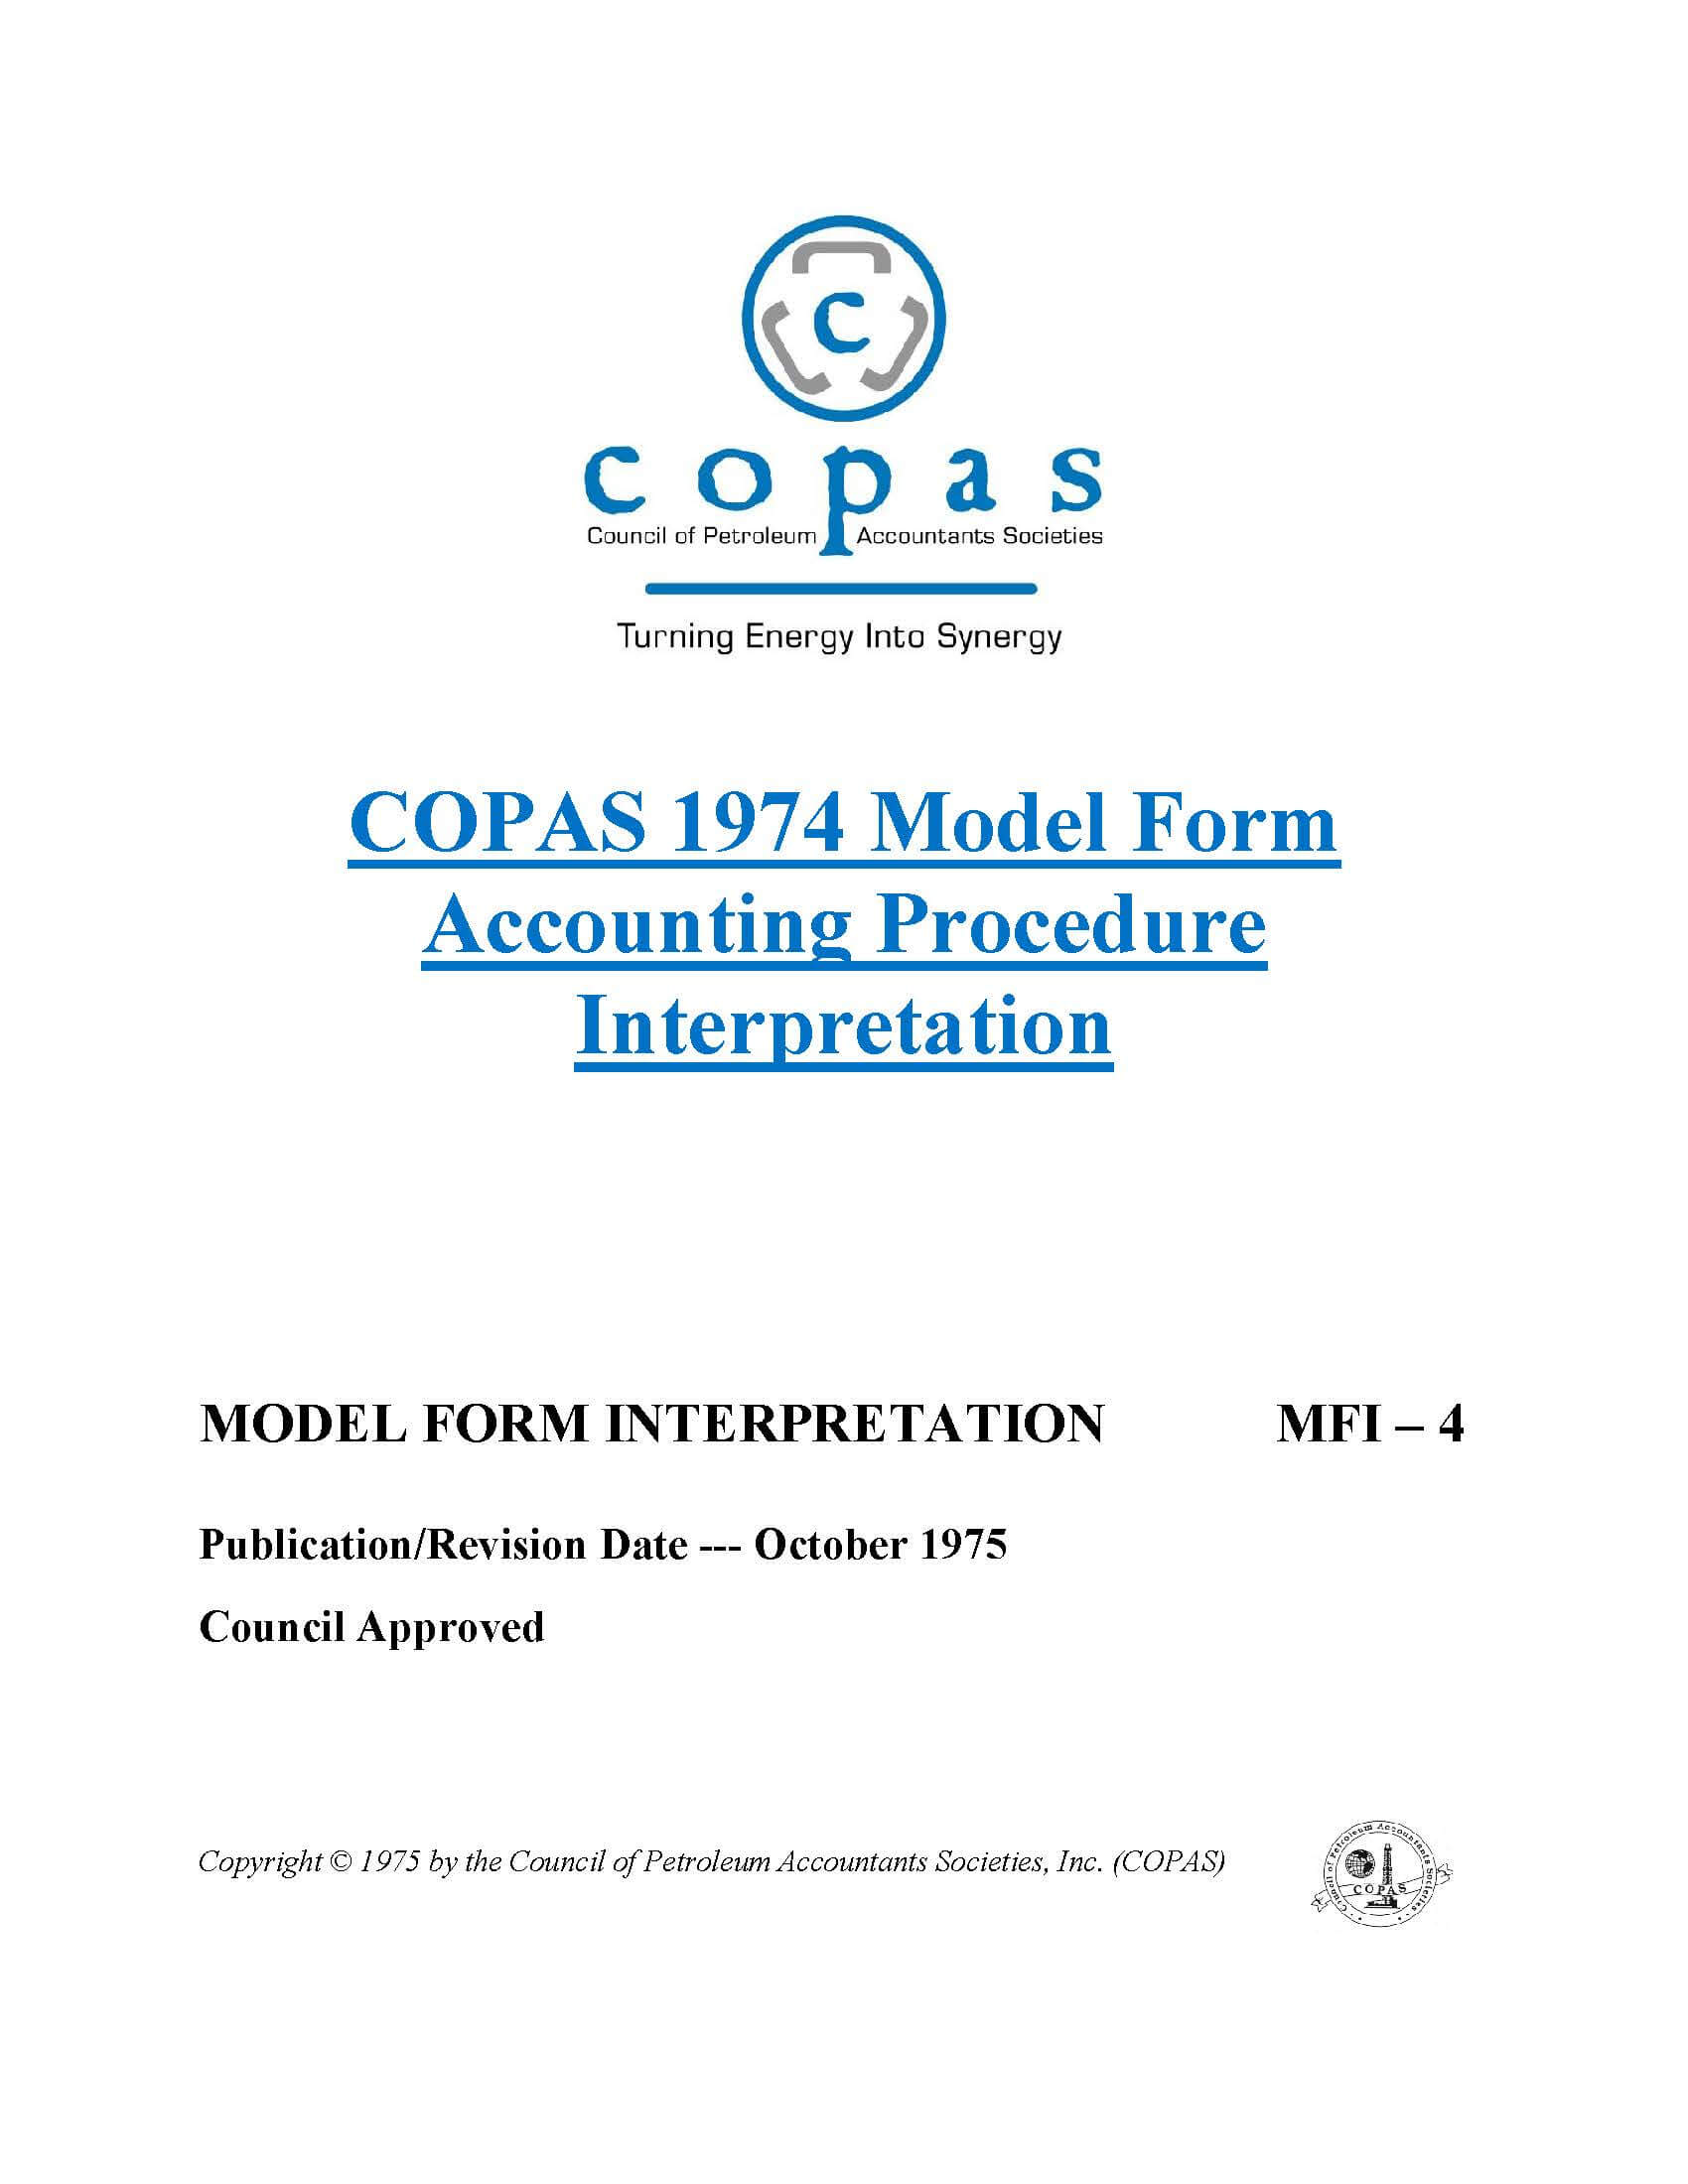 MFI-4 1974 Model Form Accounting Procedure Interpretation